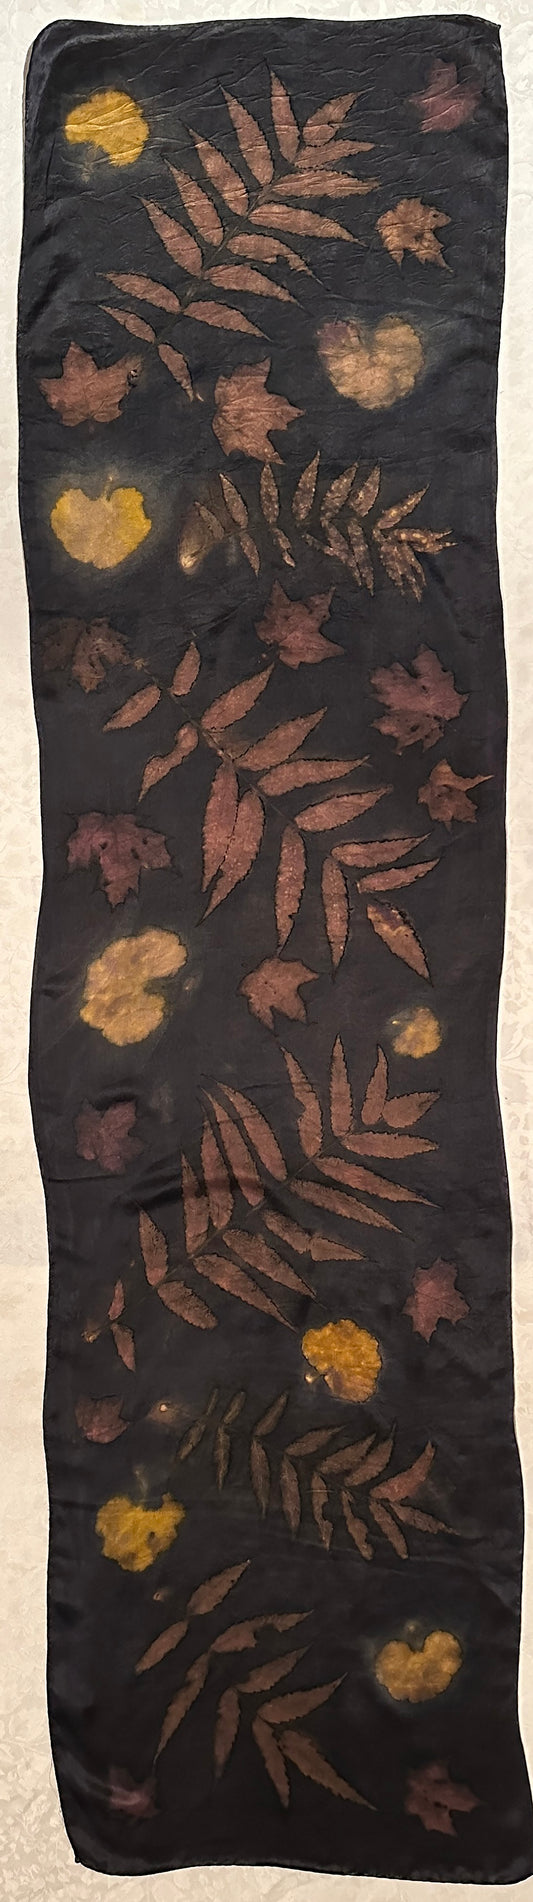 Botanical silk scarf 15" x 60" Logwood and Turmeric_15